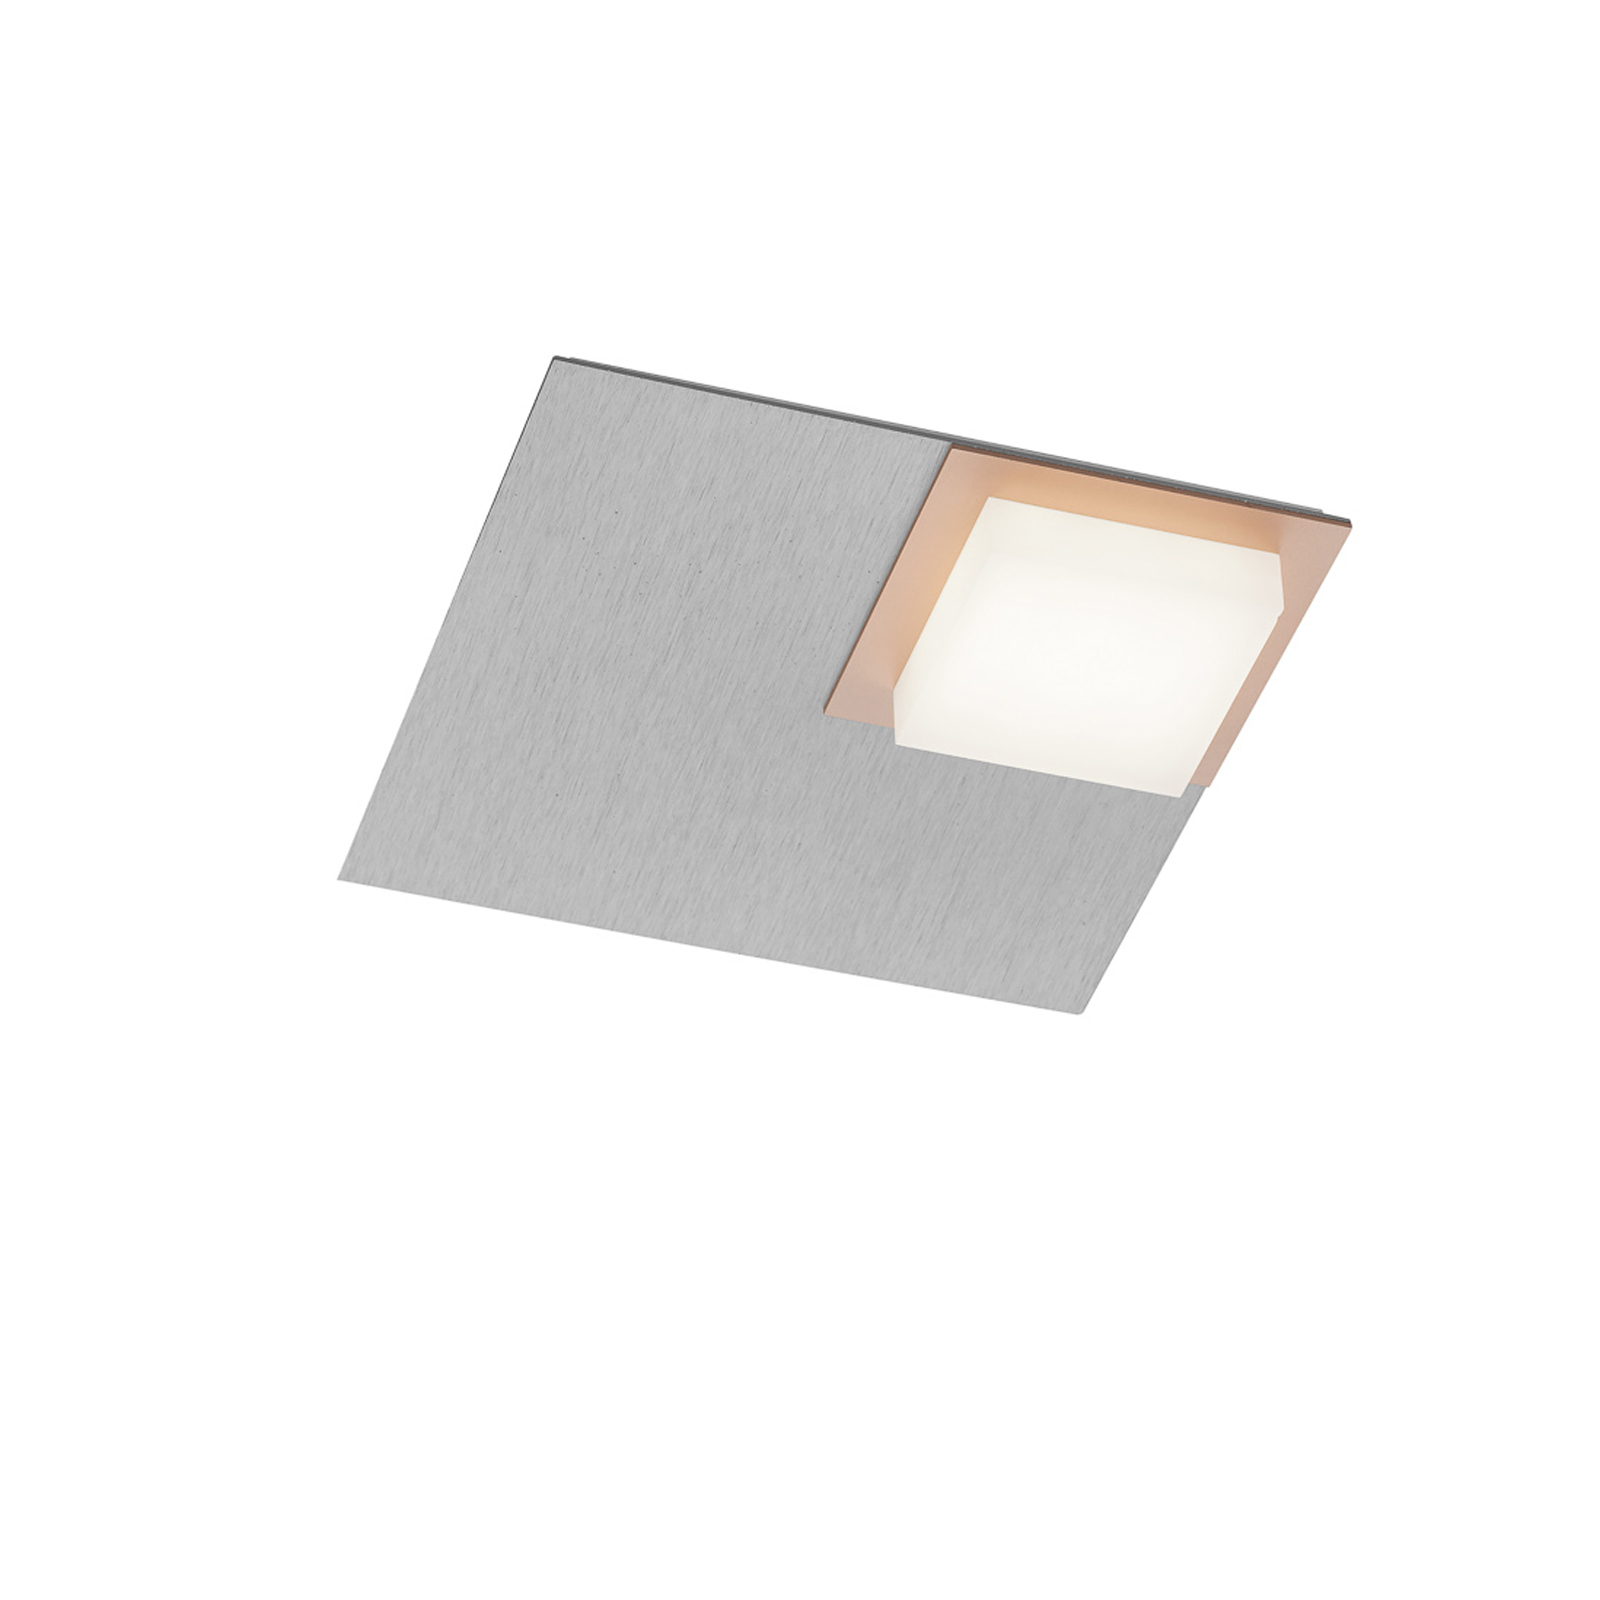 BANKAMP Quadro LED-Deckenleuchte 8W silber